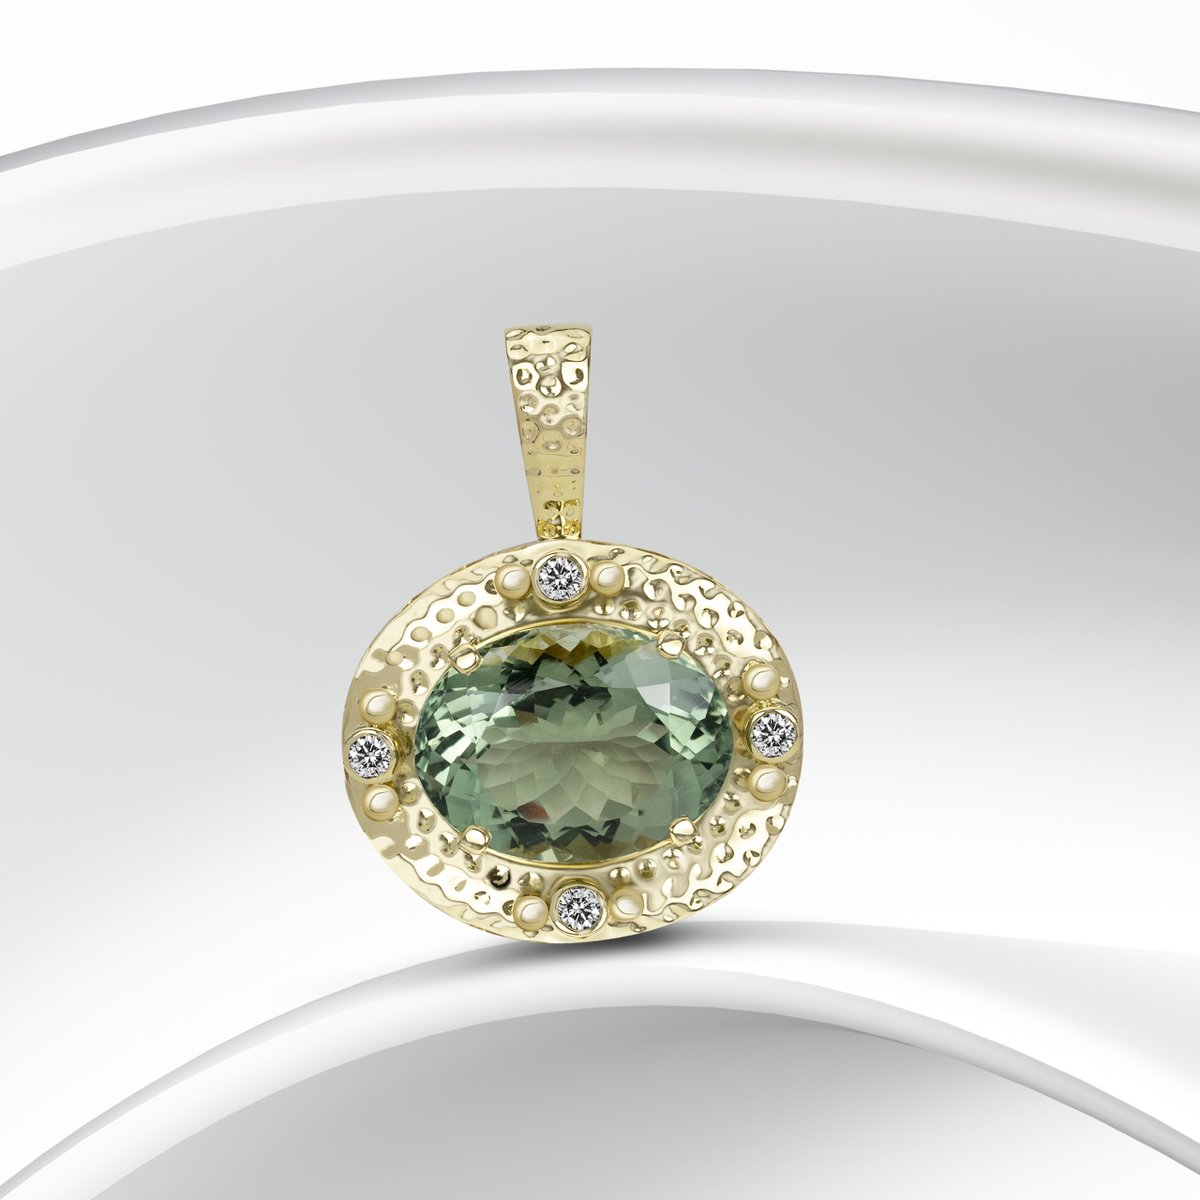 Embrace elegance with this stunning green quartz and diamond pendant
.
.
.
.
.
#singhvijewels #diamondpendant #diamondjewelry #sparklingcharm #dazzlingdiamonds #pendantperfection #diamondnecklace #luxuryjewels #elegantdiamonds #jewelryaddiction #timelessbeauty